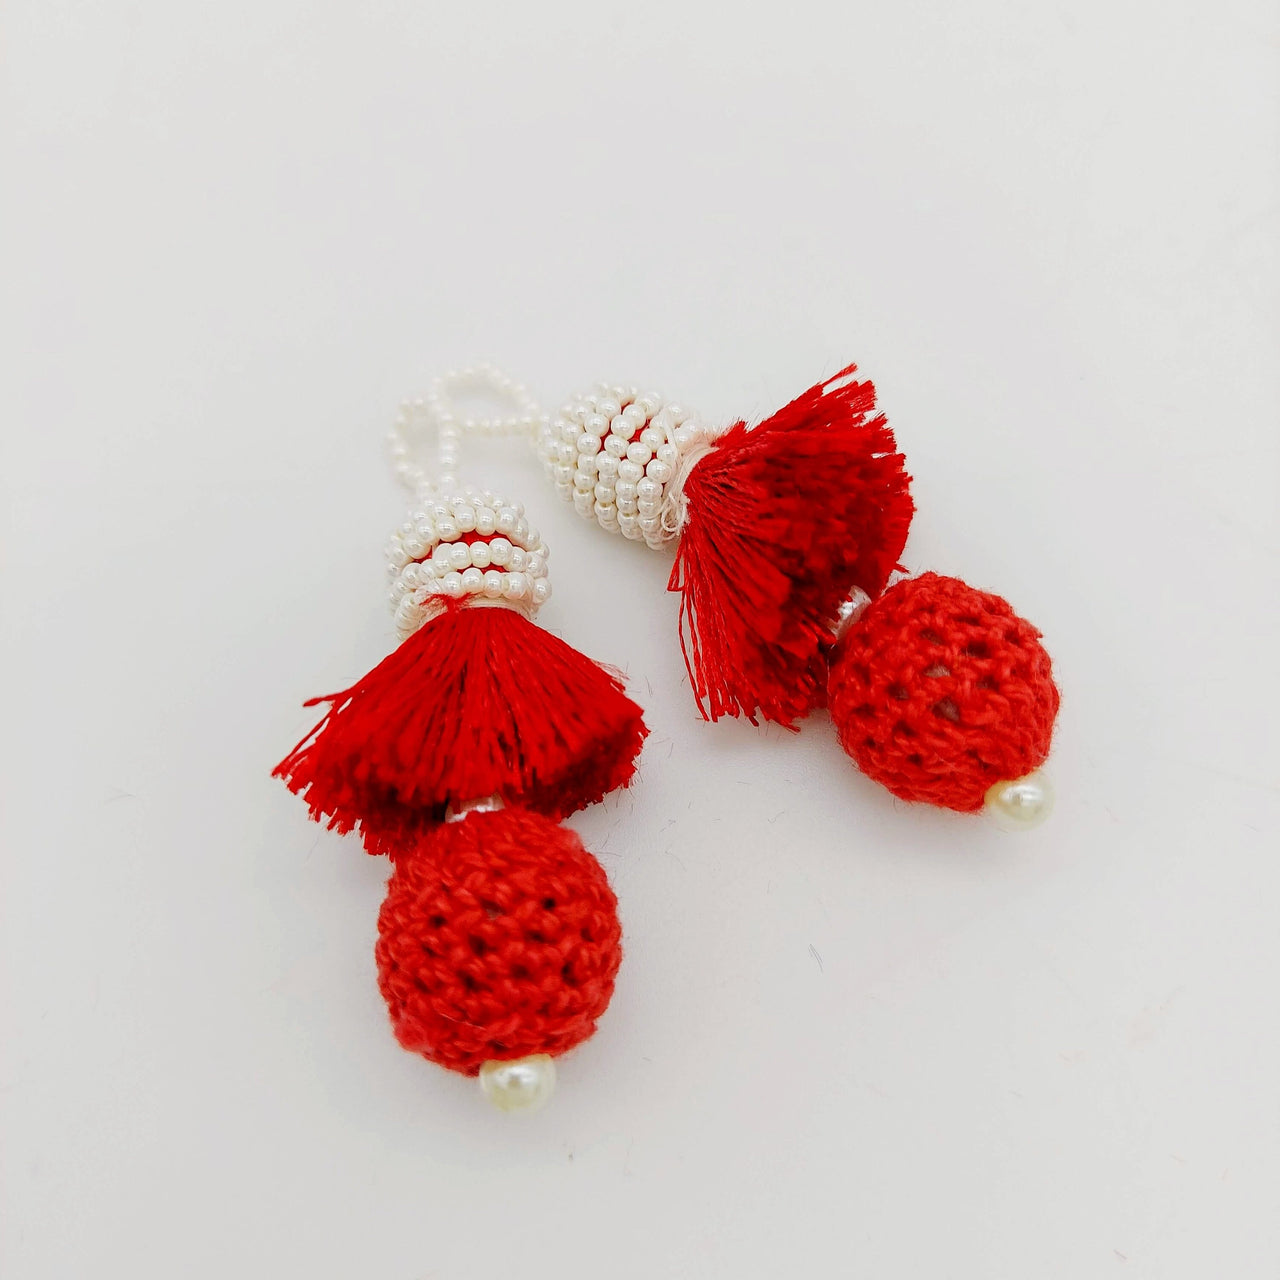 Red Crochet Ball Tassels With White Pearls Beads, Tassel Charms, Nylon Tassels x 2